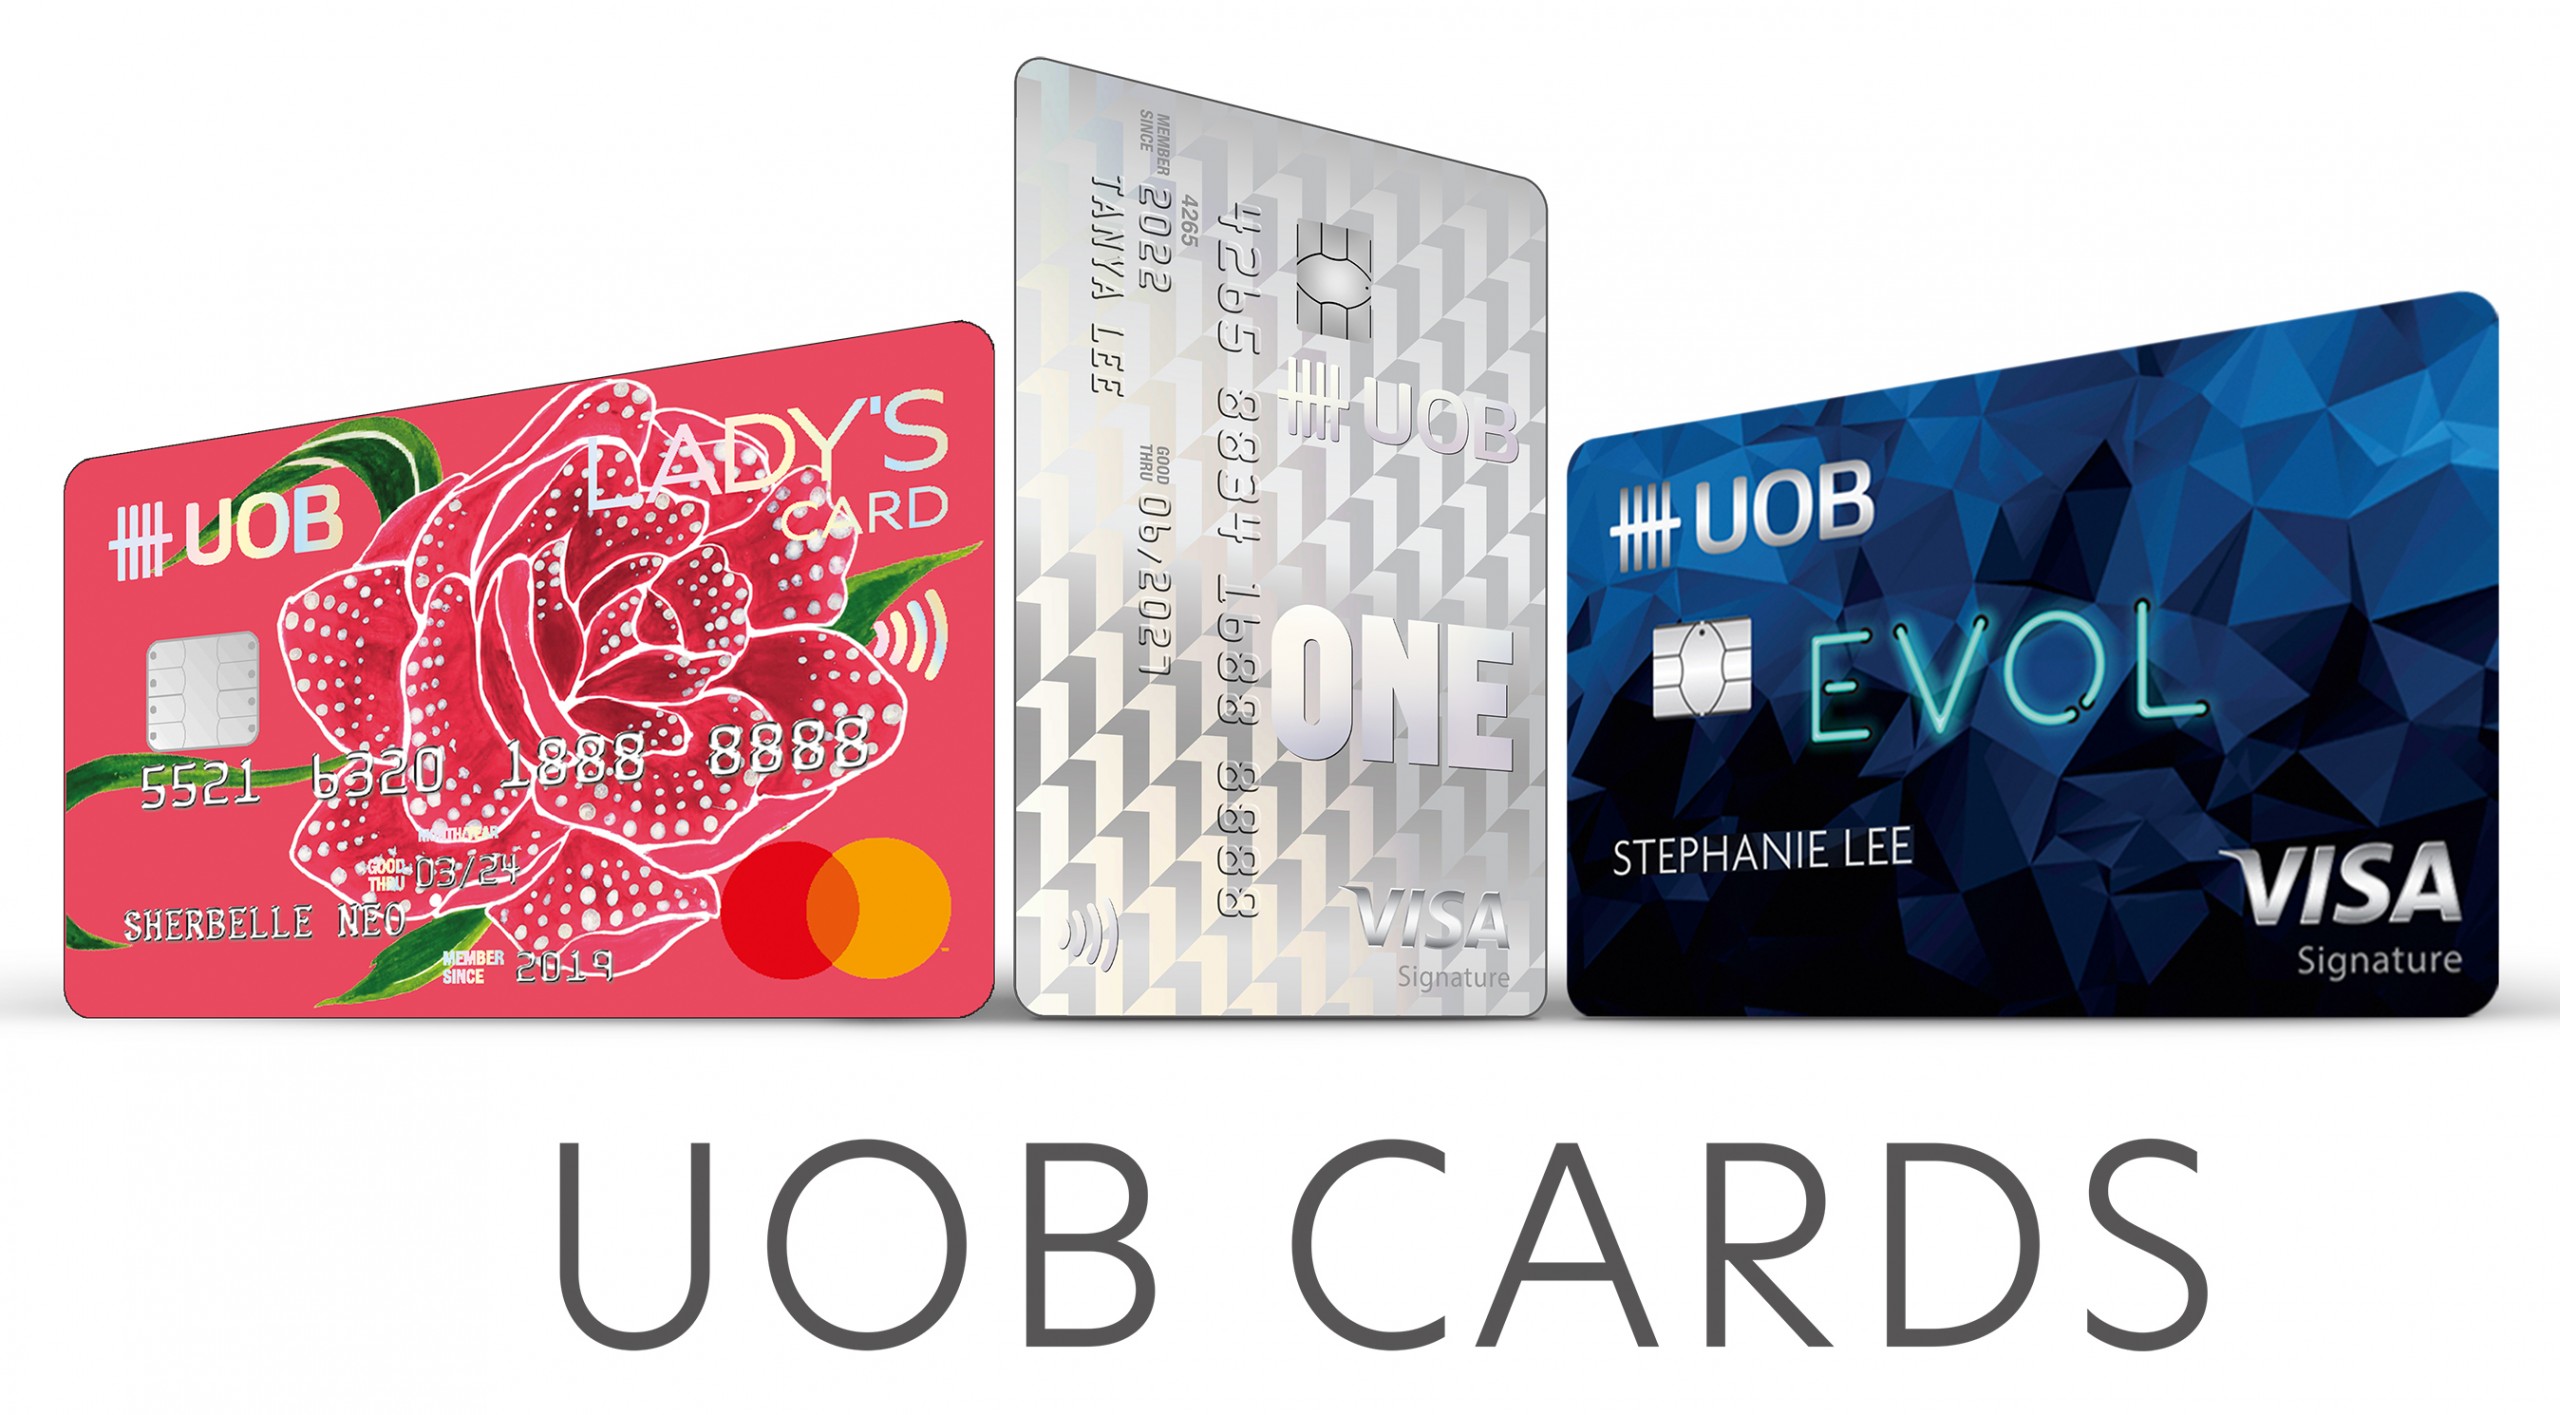 uob credit card renovation tips, Credit card strategies and cashback hacks to manage renovation costs